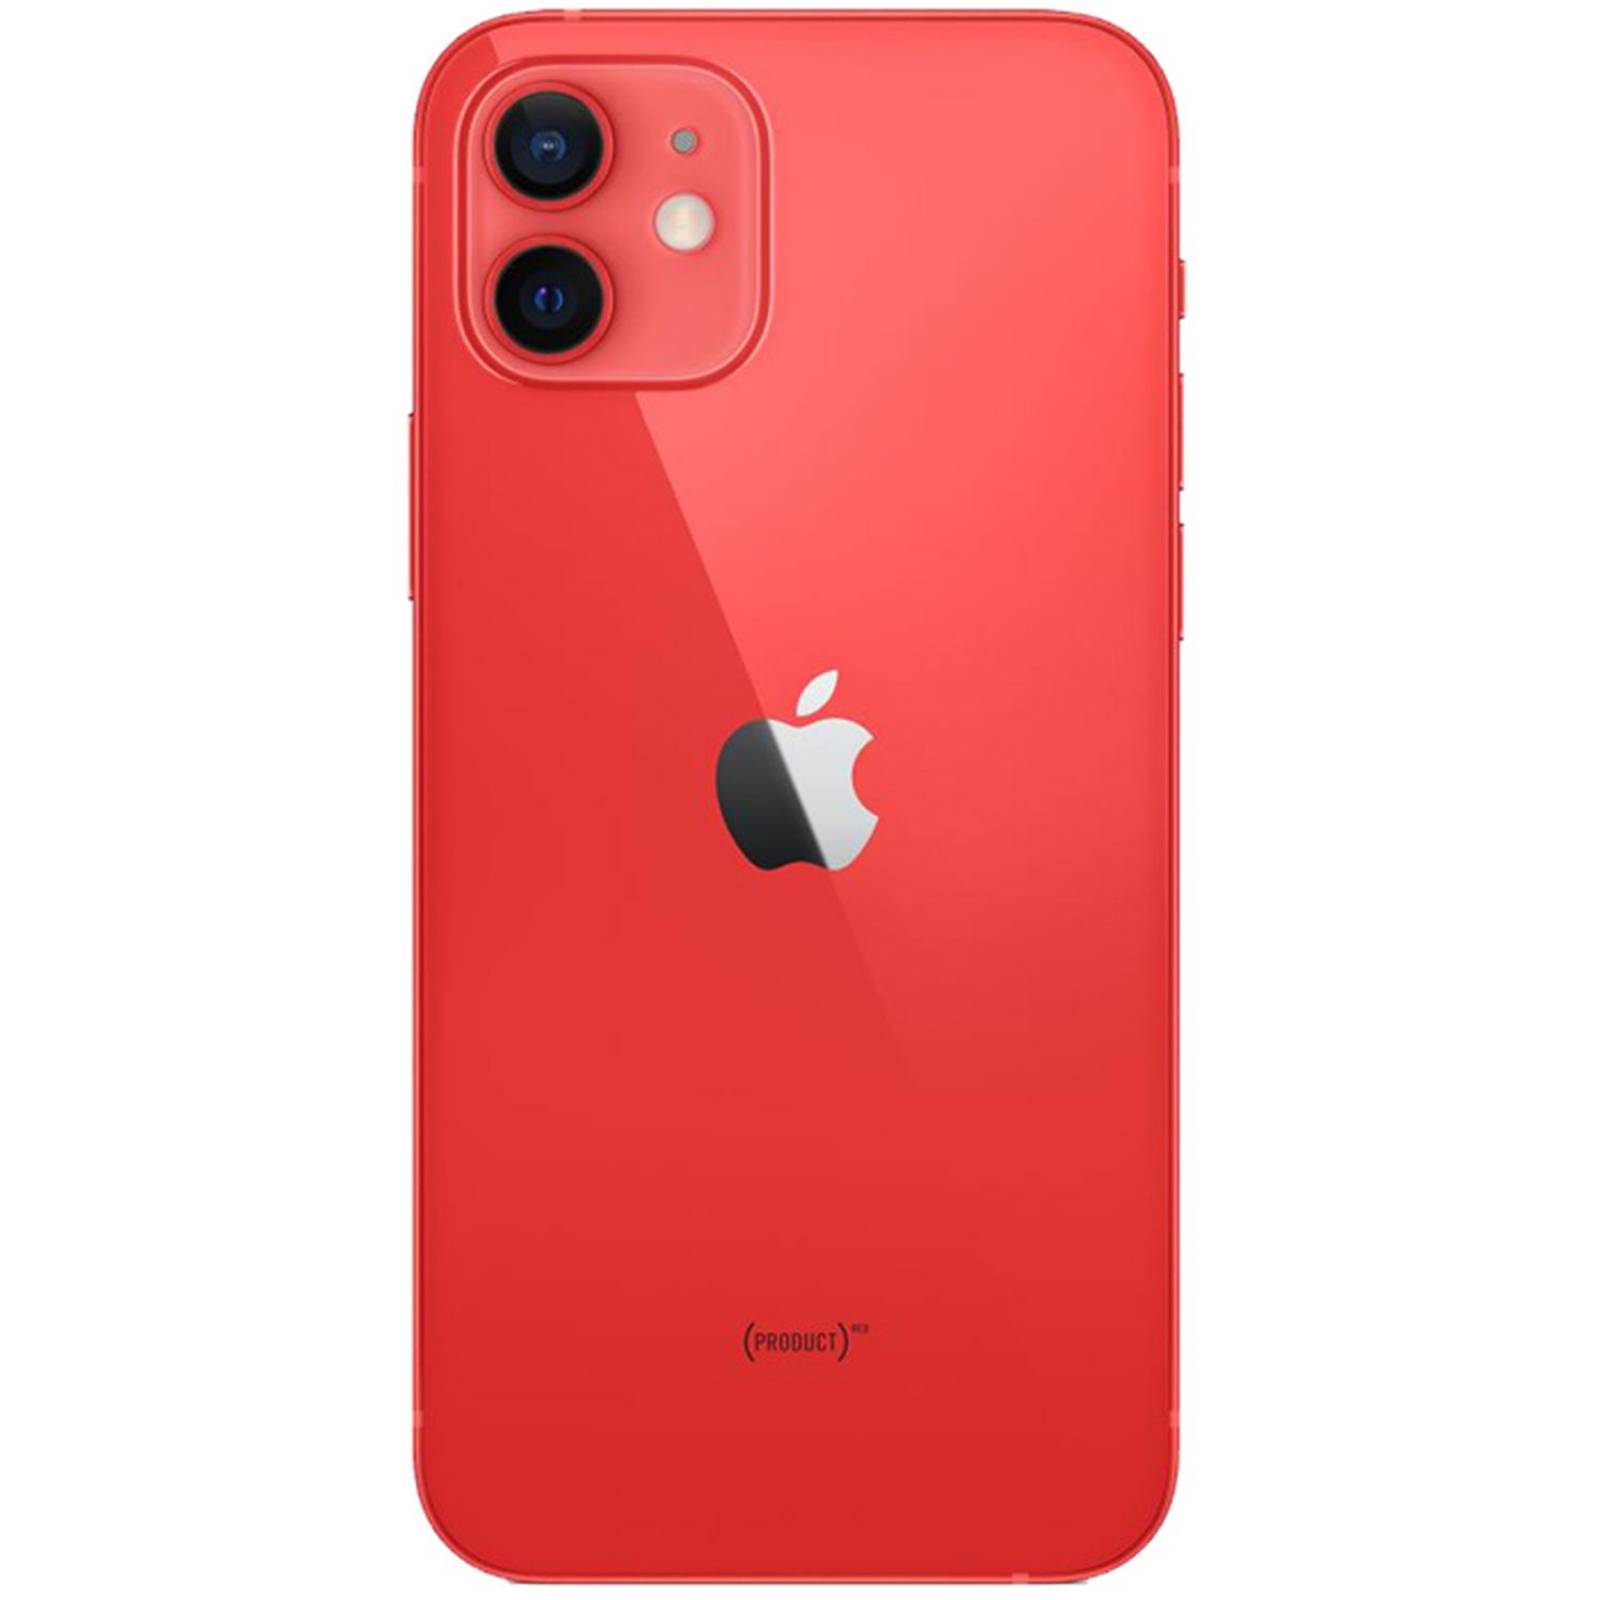 Apple - iPhone 12, 128GB, (Product) Red, totalmente desbloqueado  (reacondicionado)